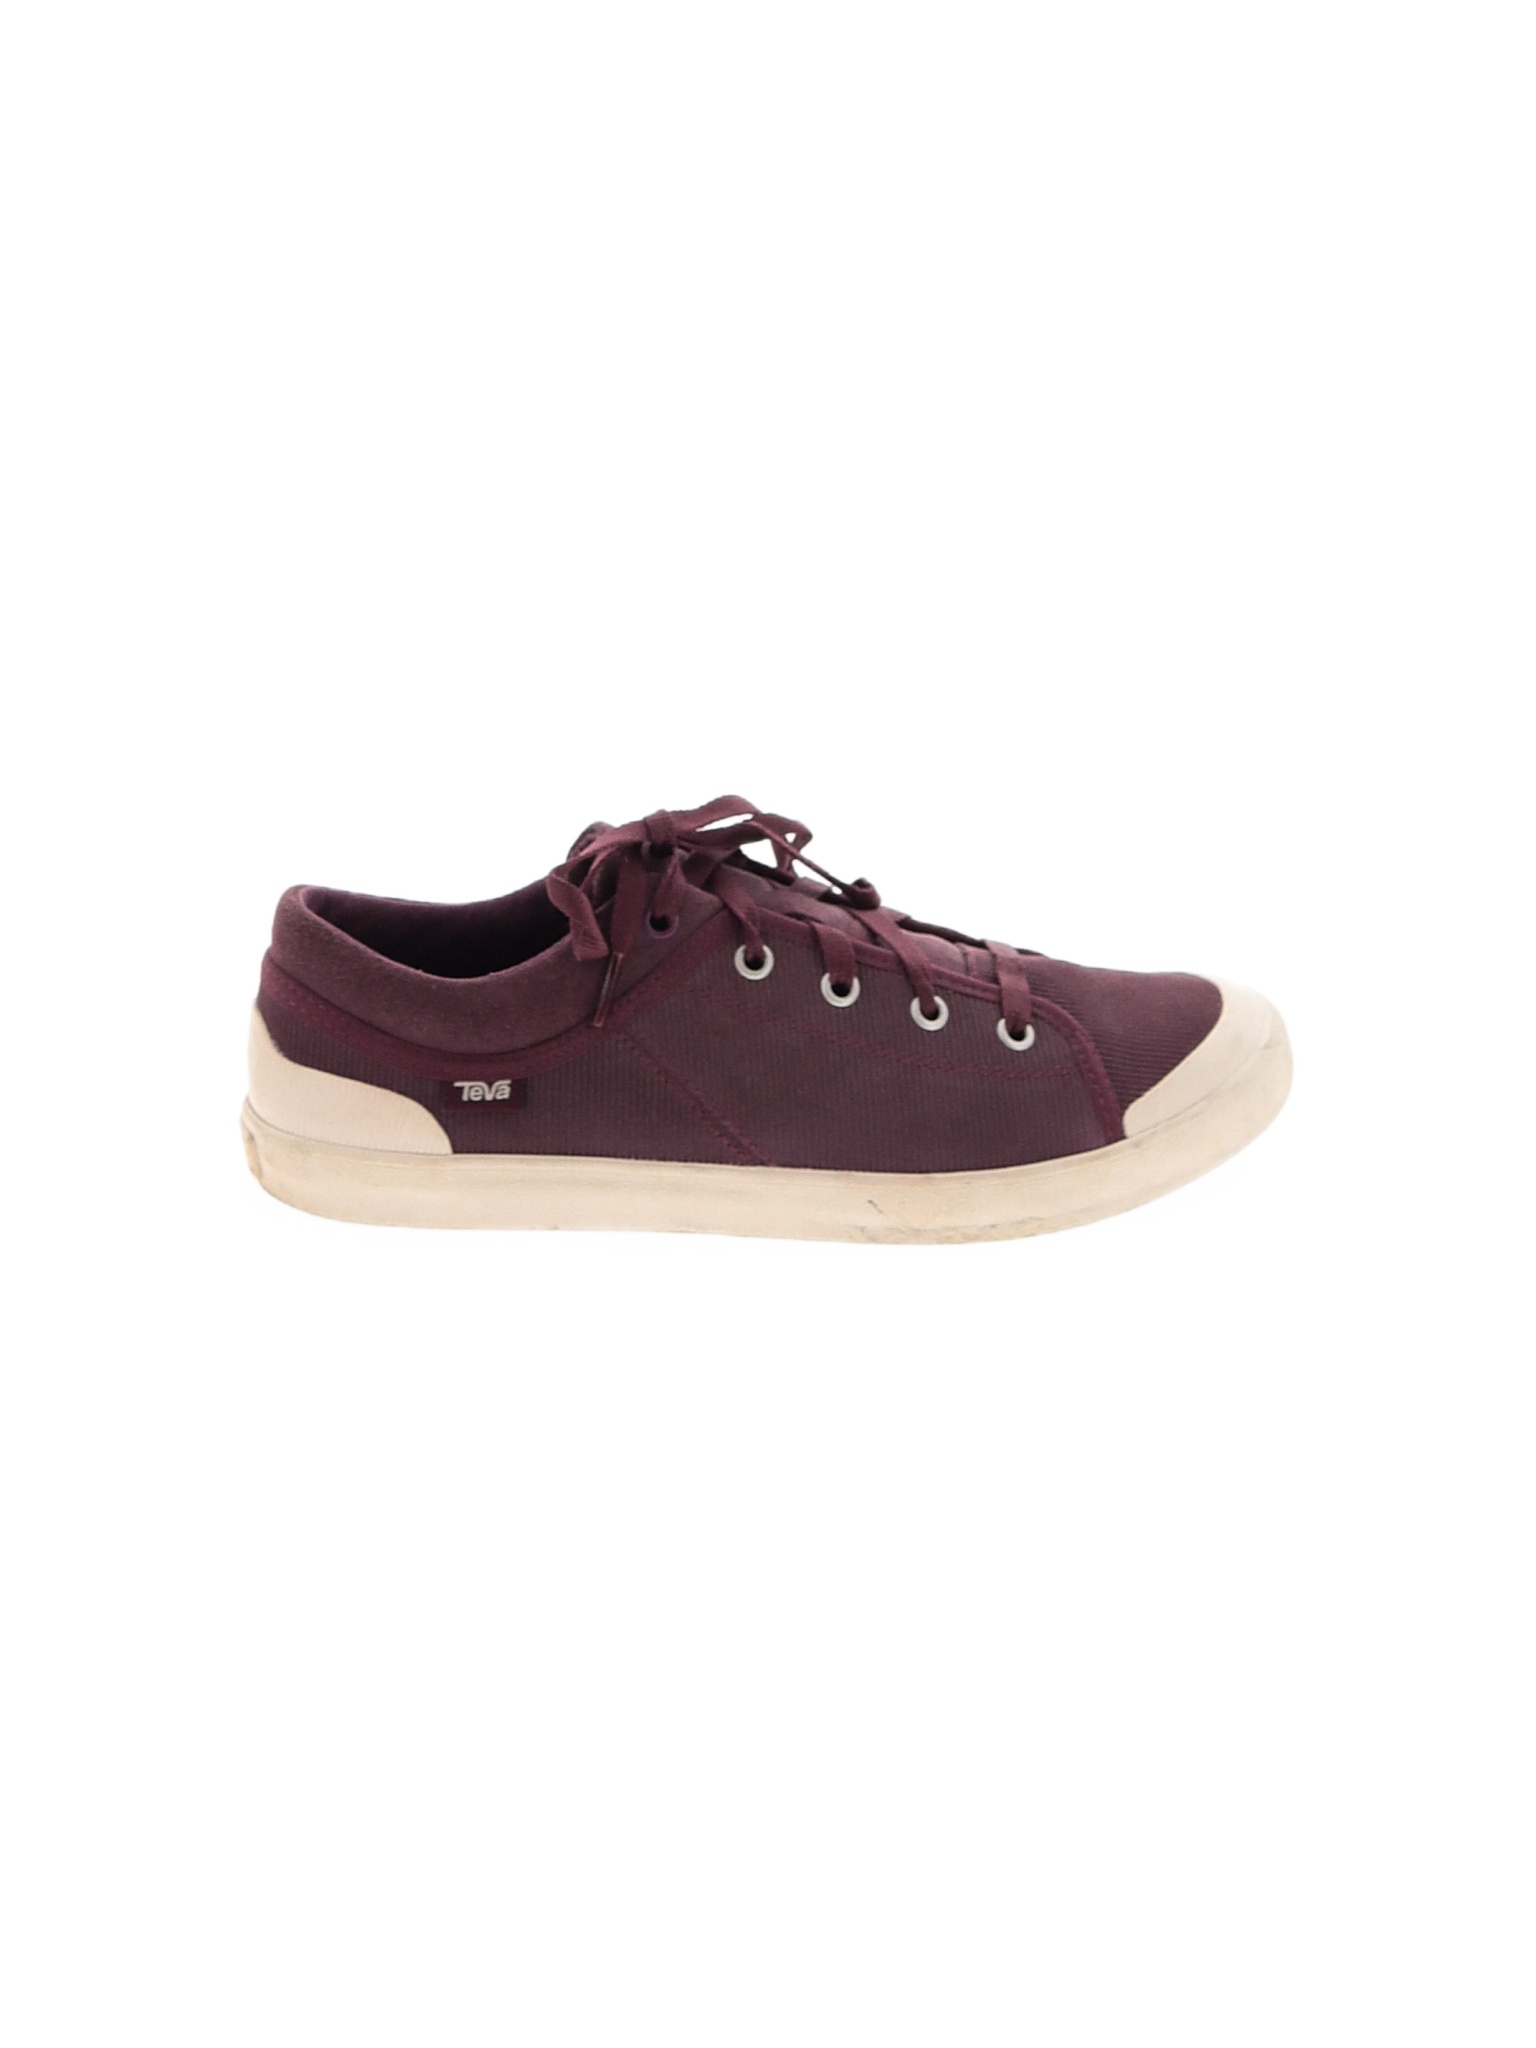 Teva Colored Purple Sneakers Size 1/2 57% off | thredUP